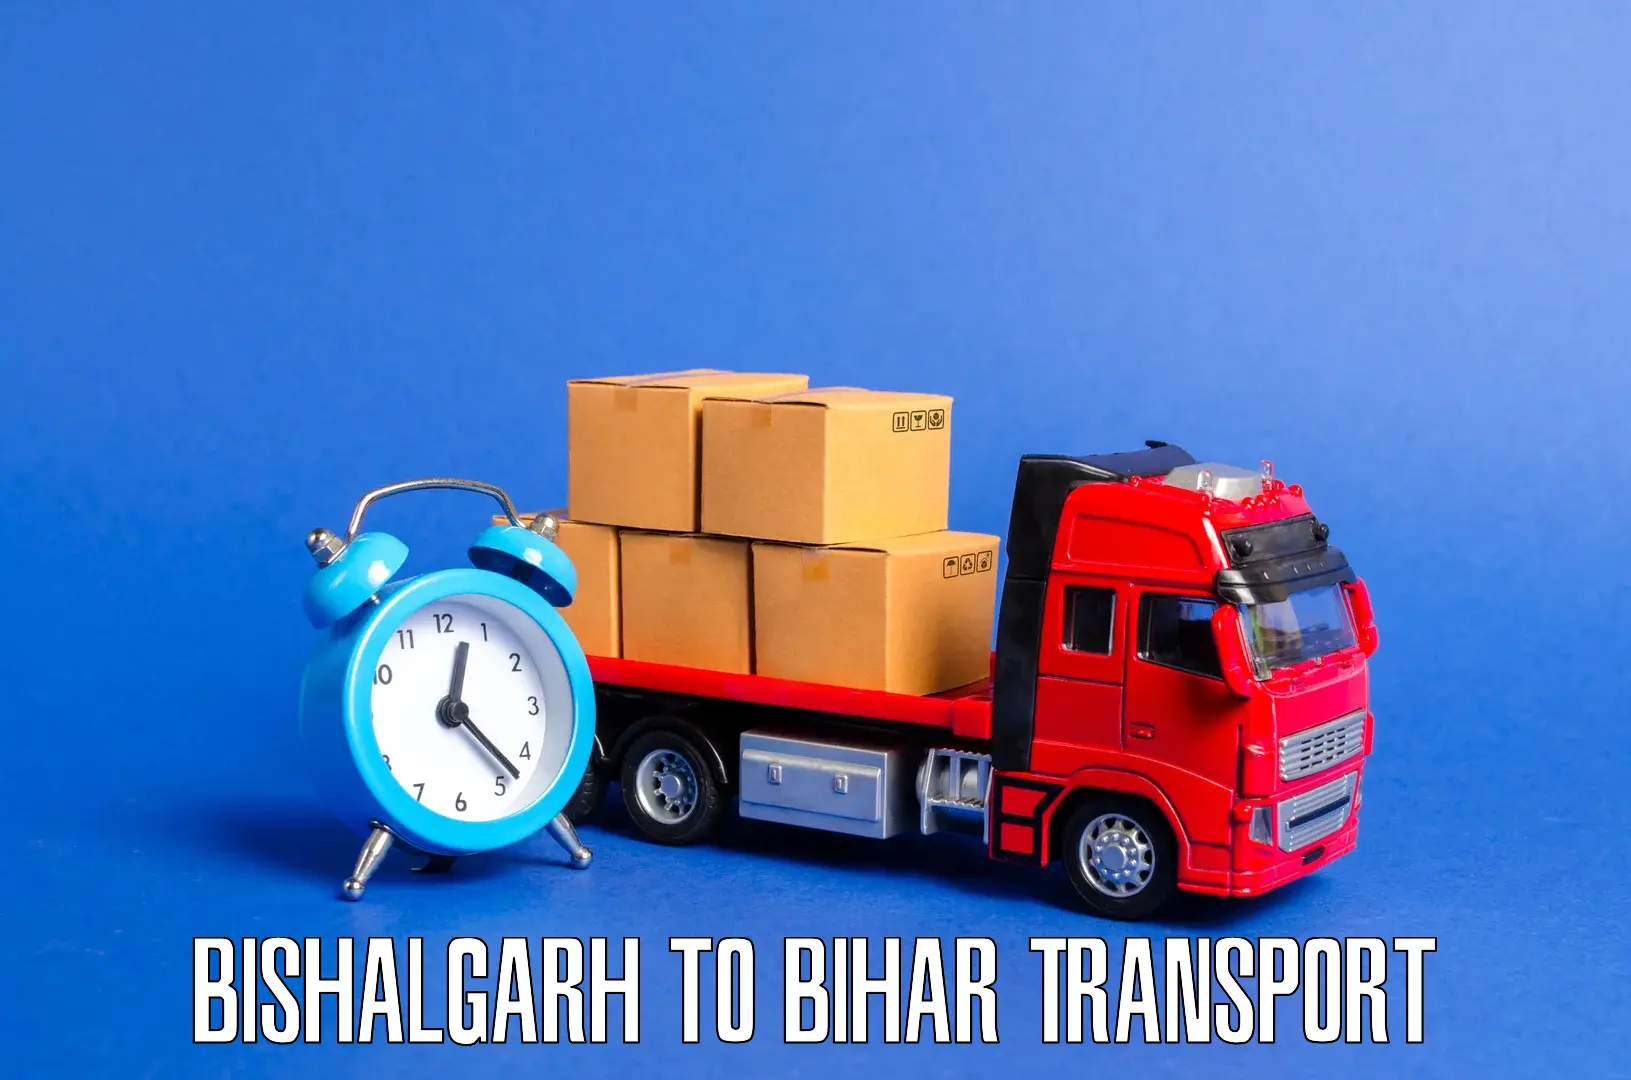 Furniture transport service in Bishalgarh to Bihar